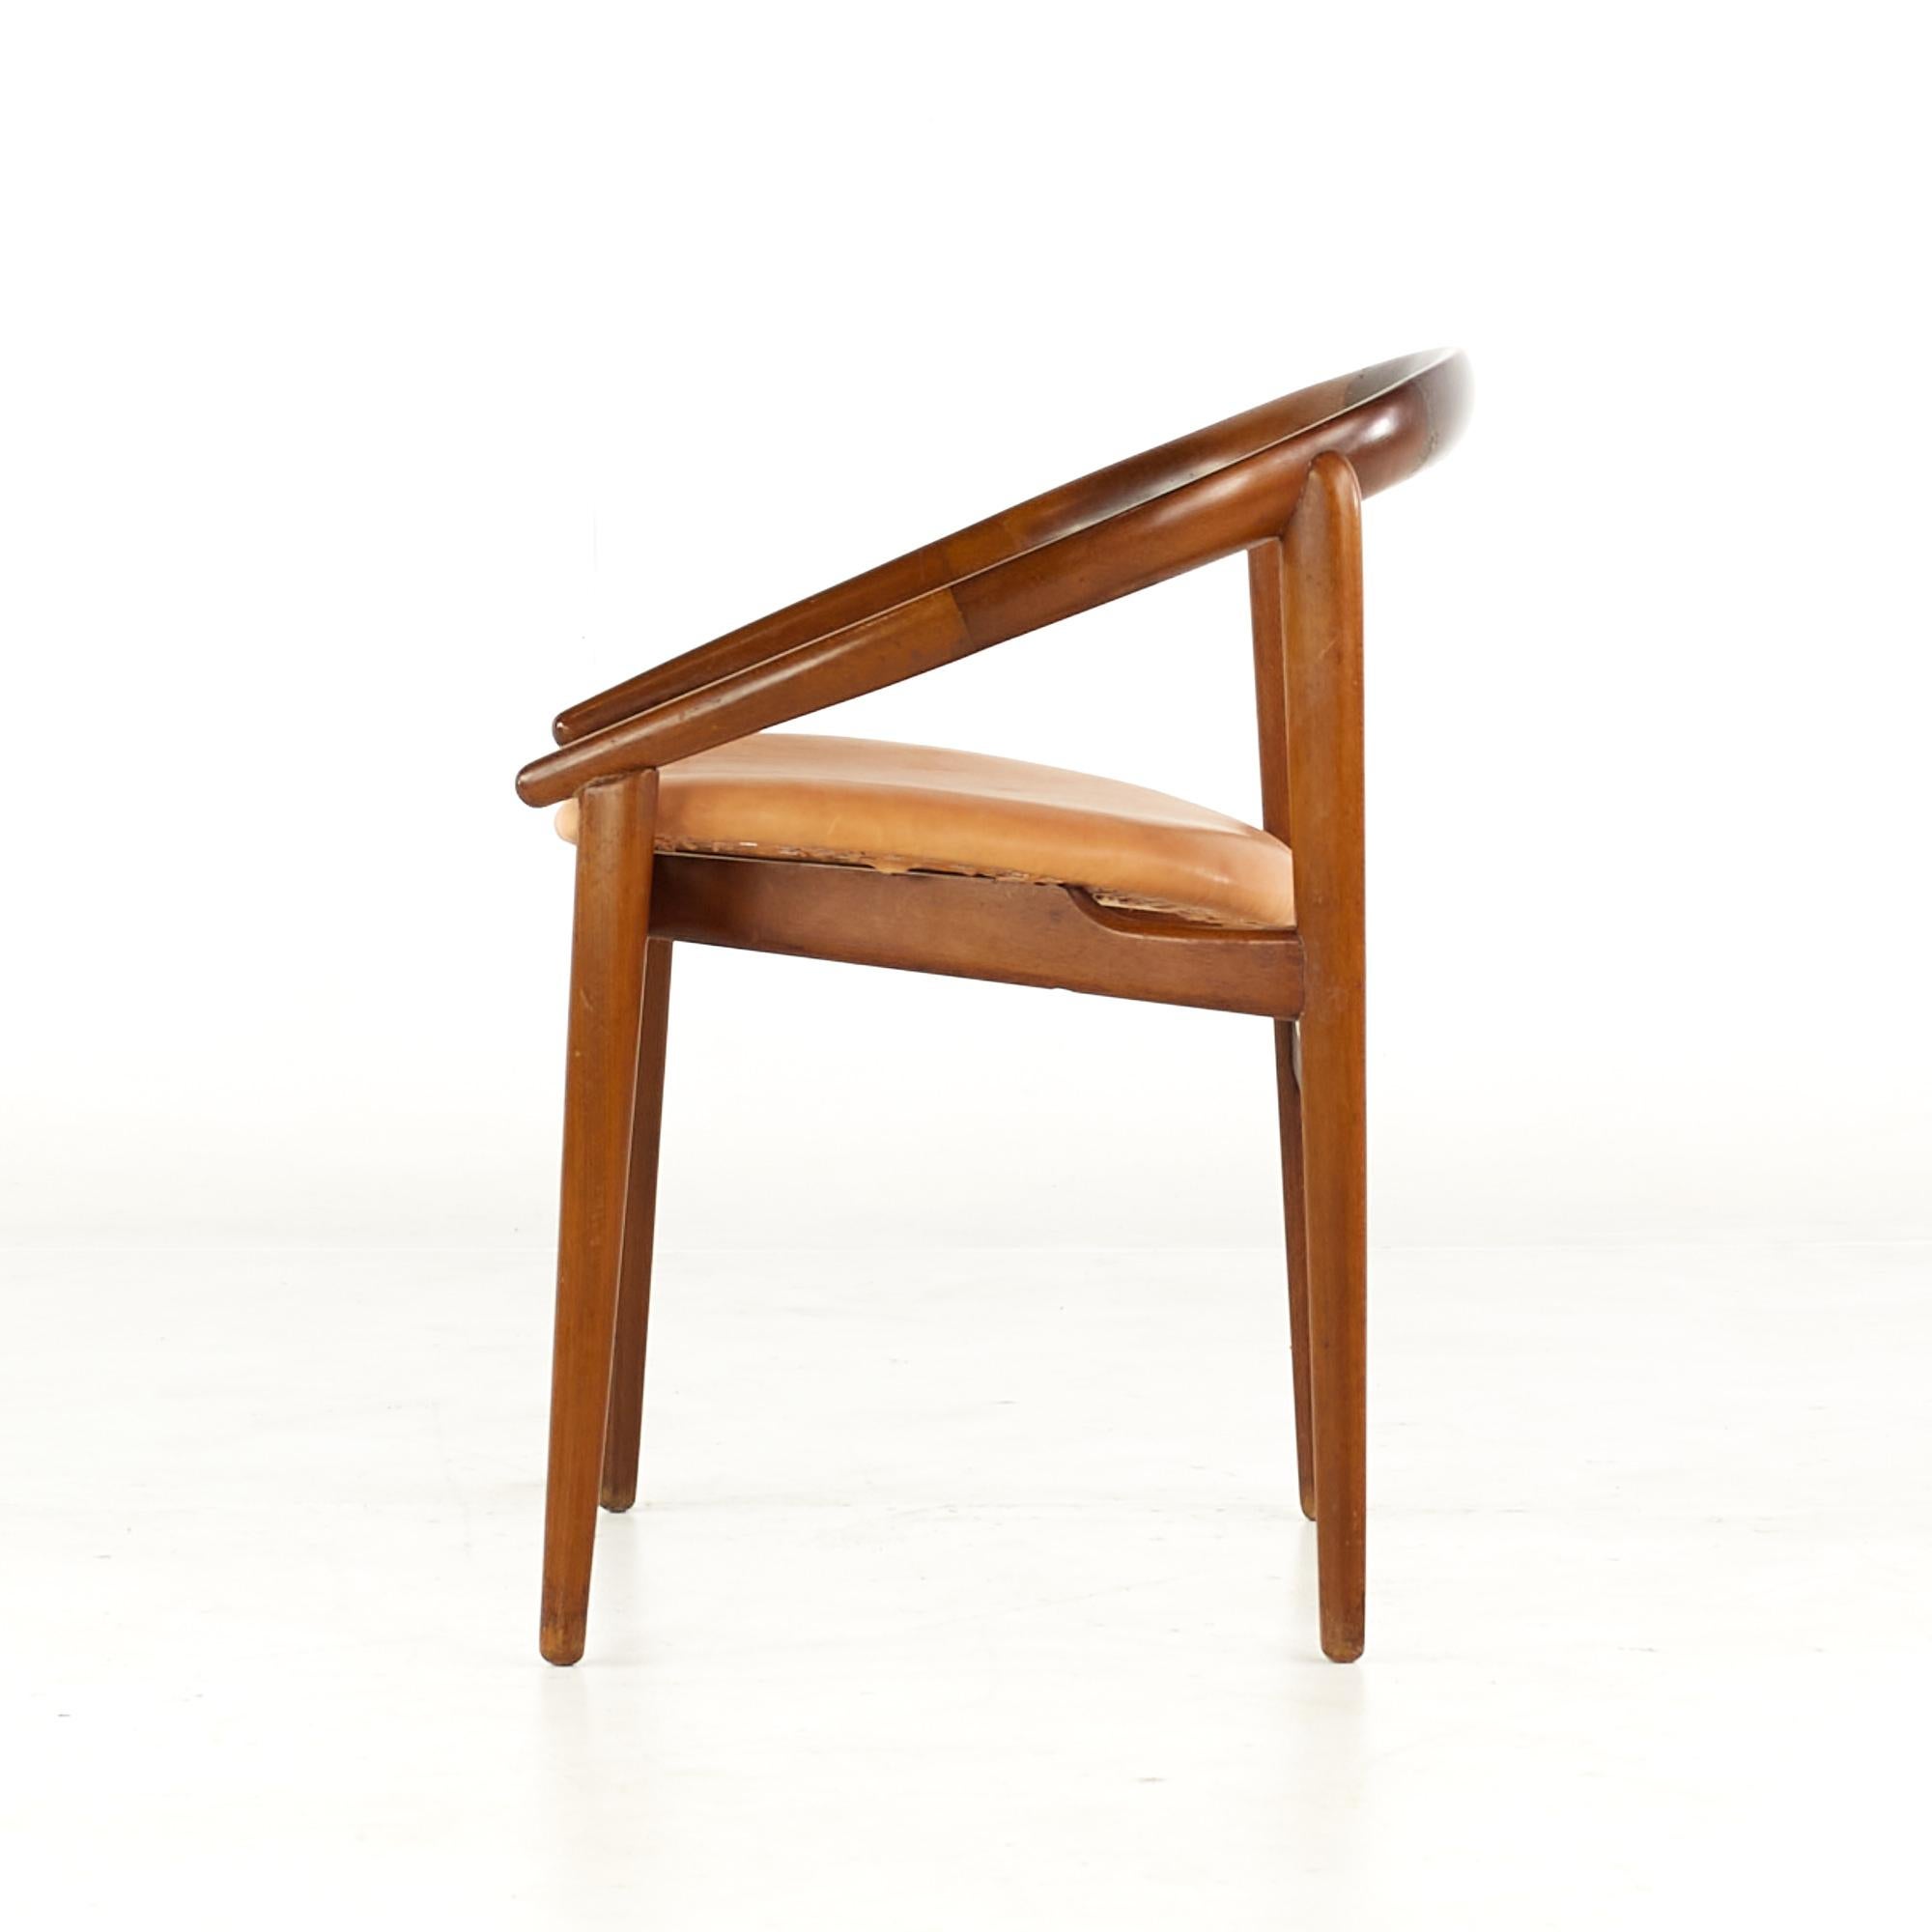 H Brockmann Petersen for Louis G Thiersen MCM Teak Horseshoe Chairs, Pair For Sale 4